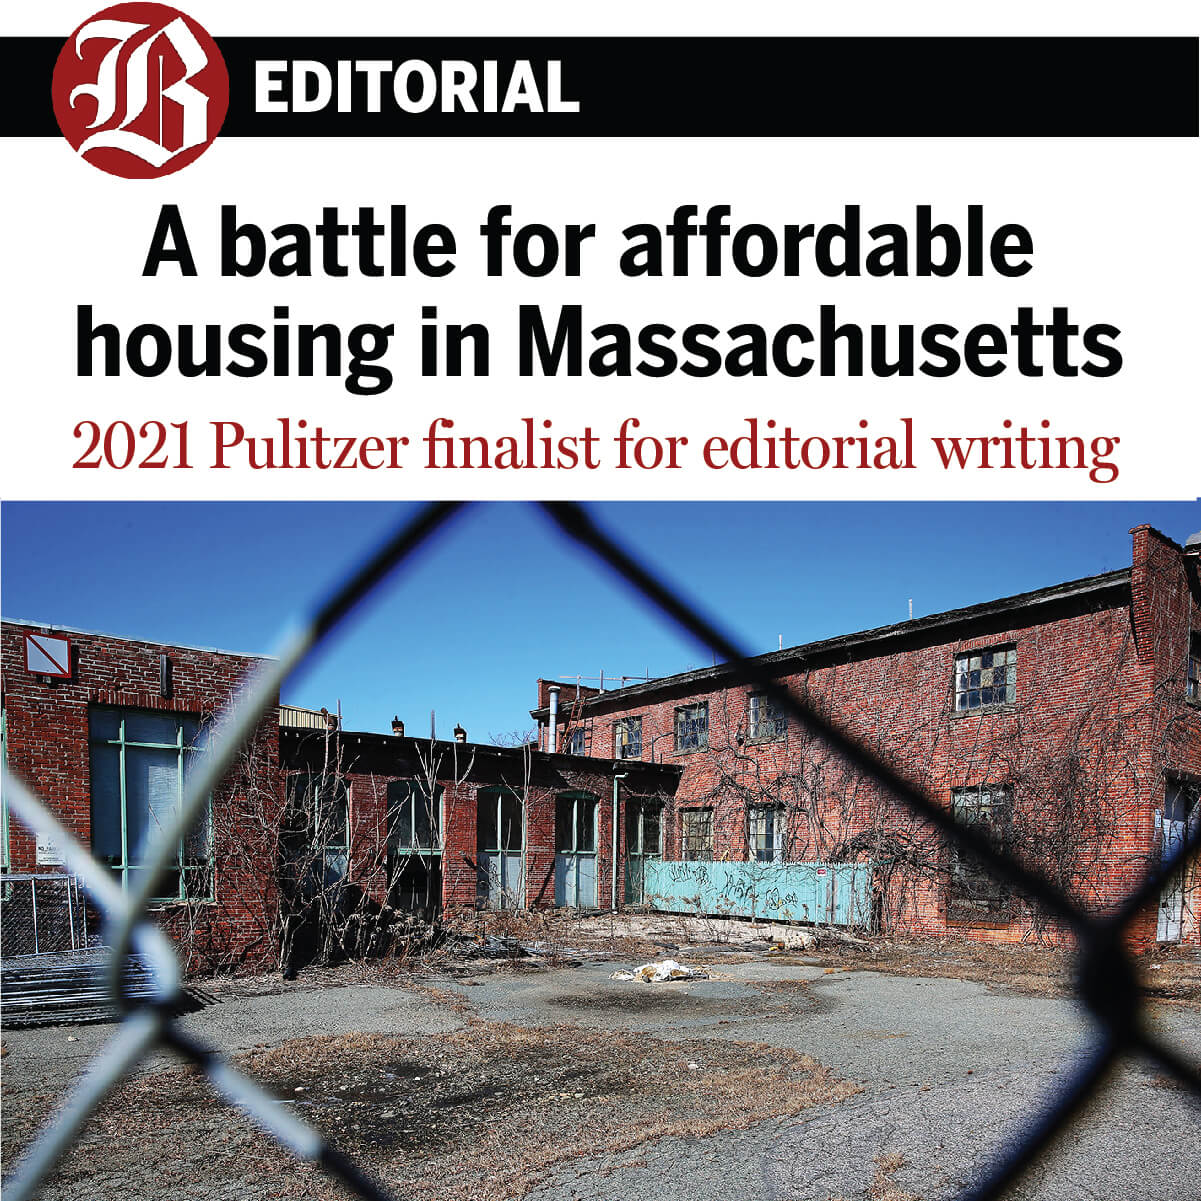 A battle for affordable housing in Massachusetts